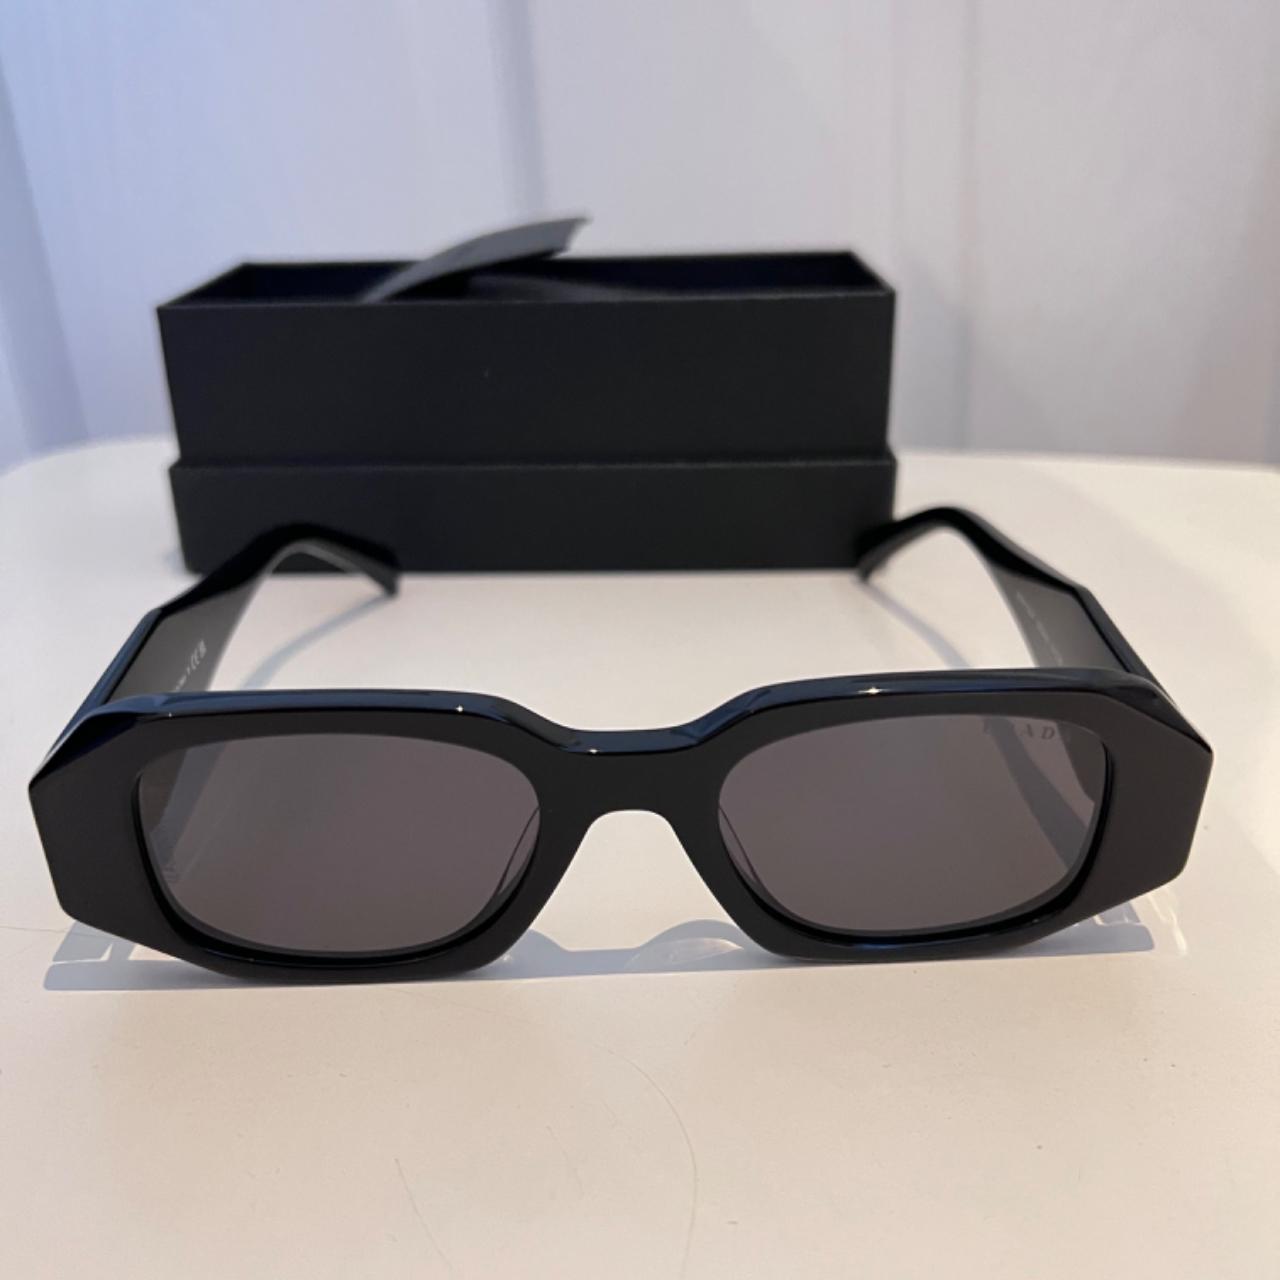 Minalo Symbole Black Sunglasses Brand new with box,... - Depop